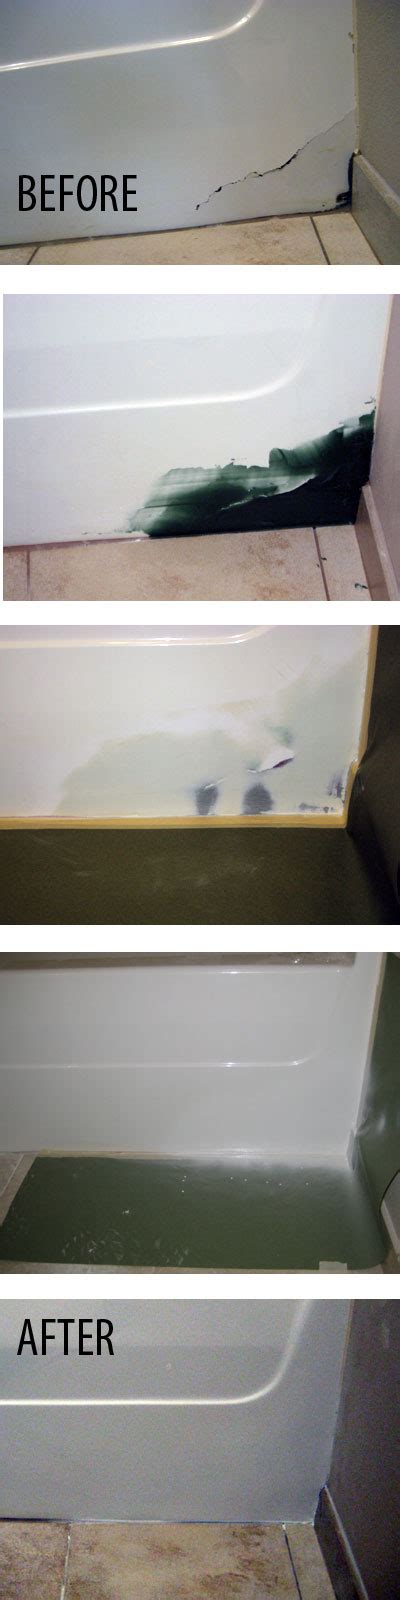 badger bath bath tub countertop  shower repair  refinishing project gallery